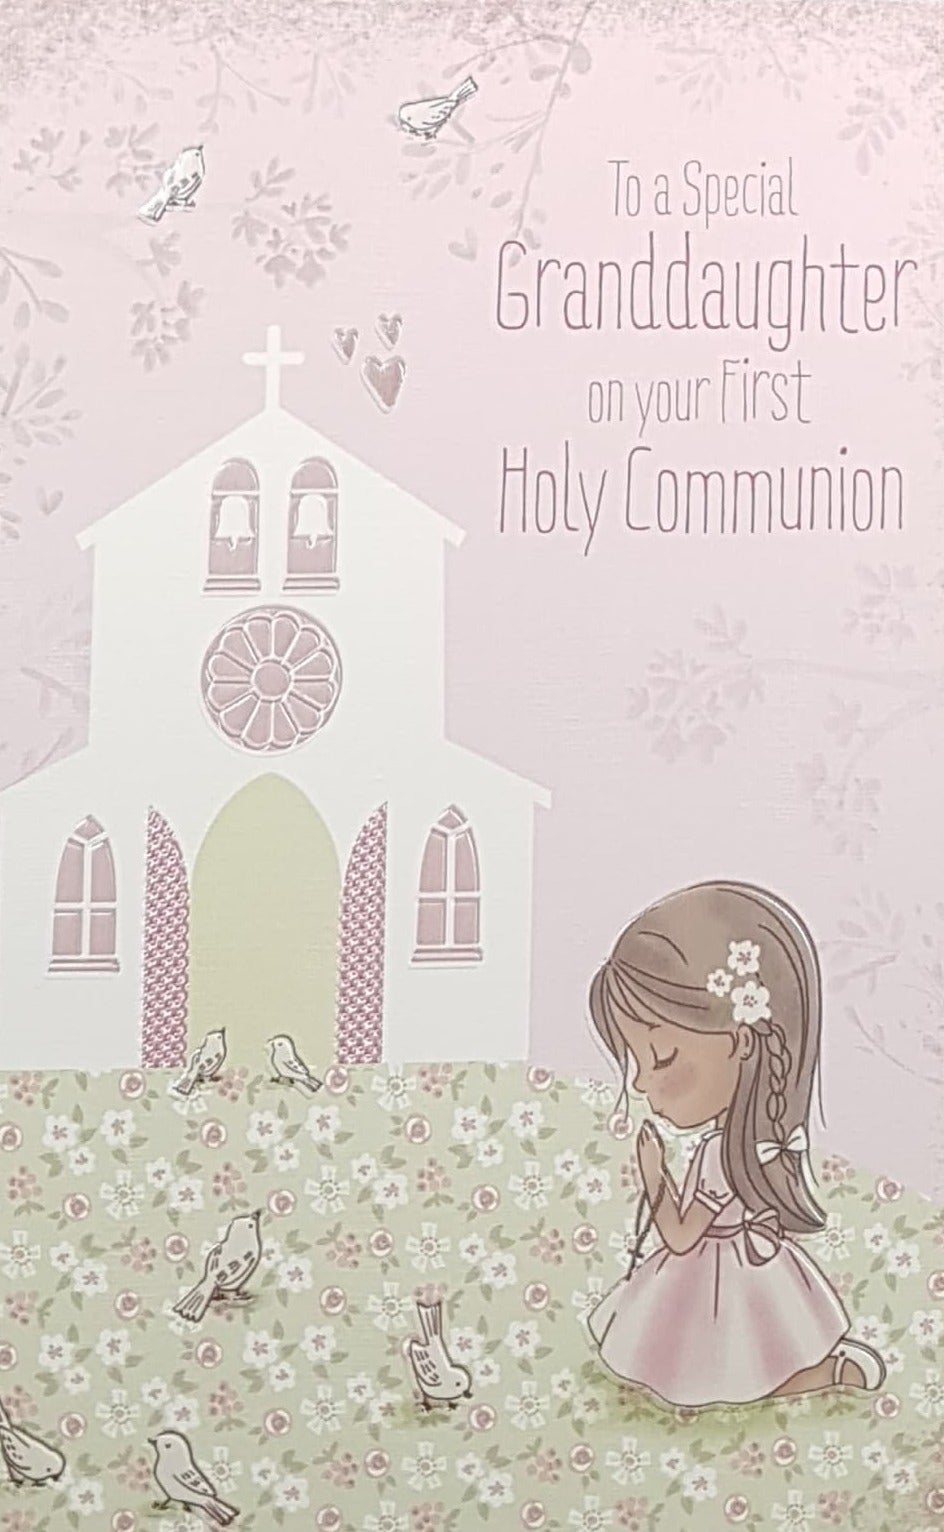 Communion Card - Granddaughter / A Pretty Girl Praying & White Birds